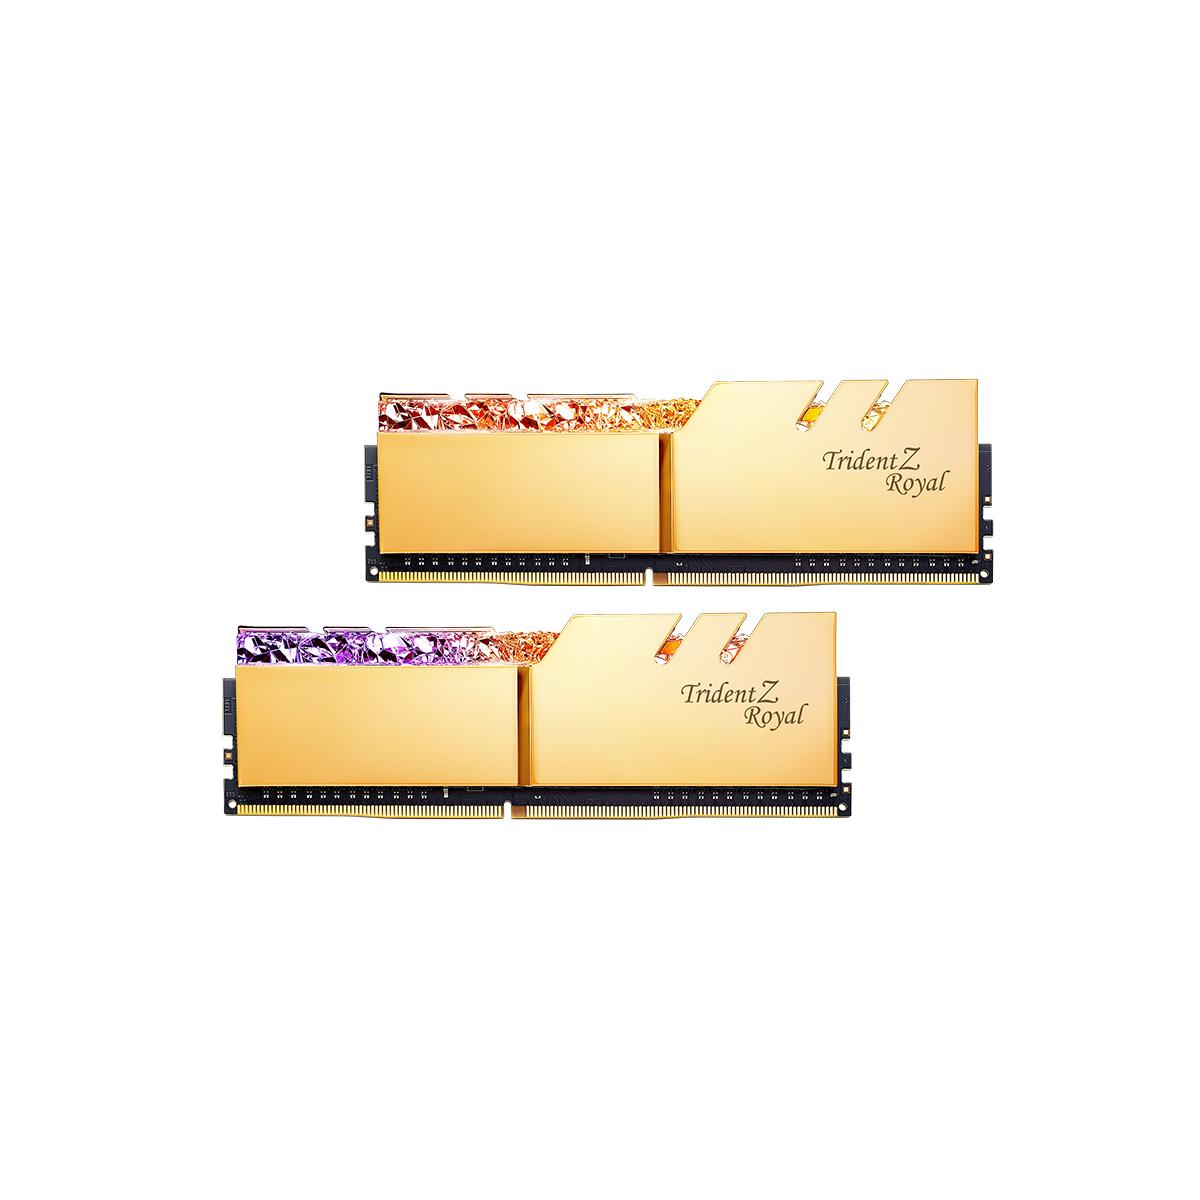 MEMORIA DIMM DDR4 G.SKILL (F4-3600C18D-16GTRG) 16GB (2X8GB) 3600MHZ, TRIDENT Z ROYAL GOLD - F4-3600C18D-16GTRG